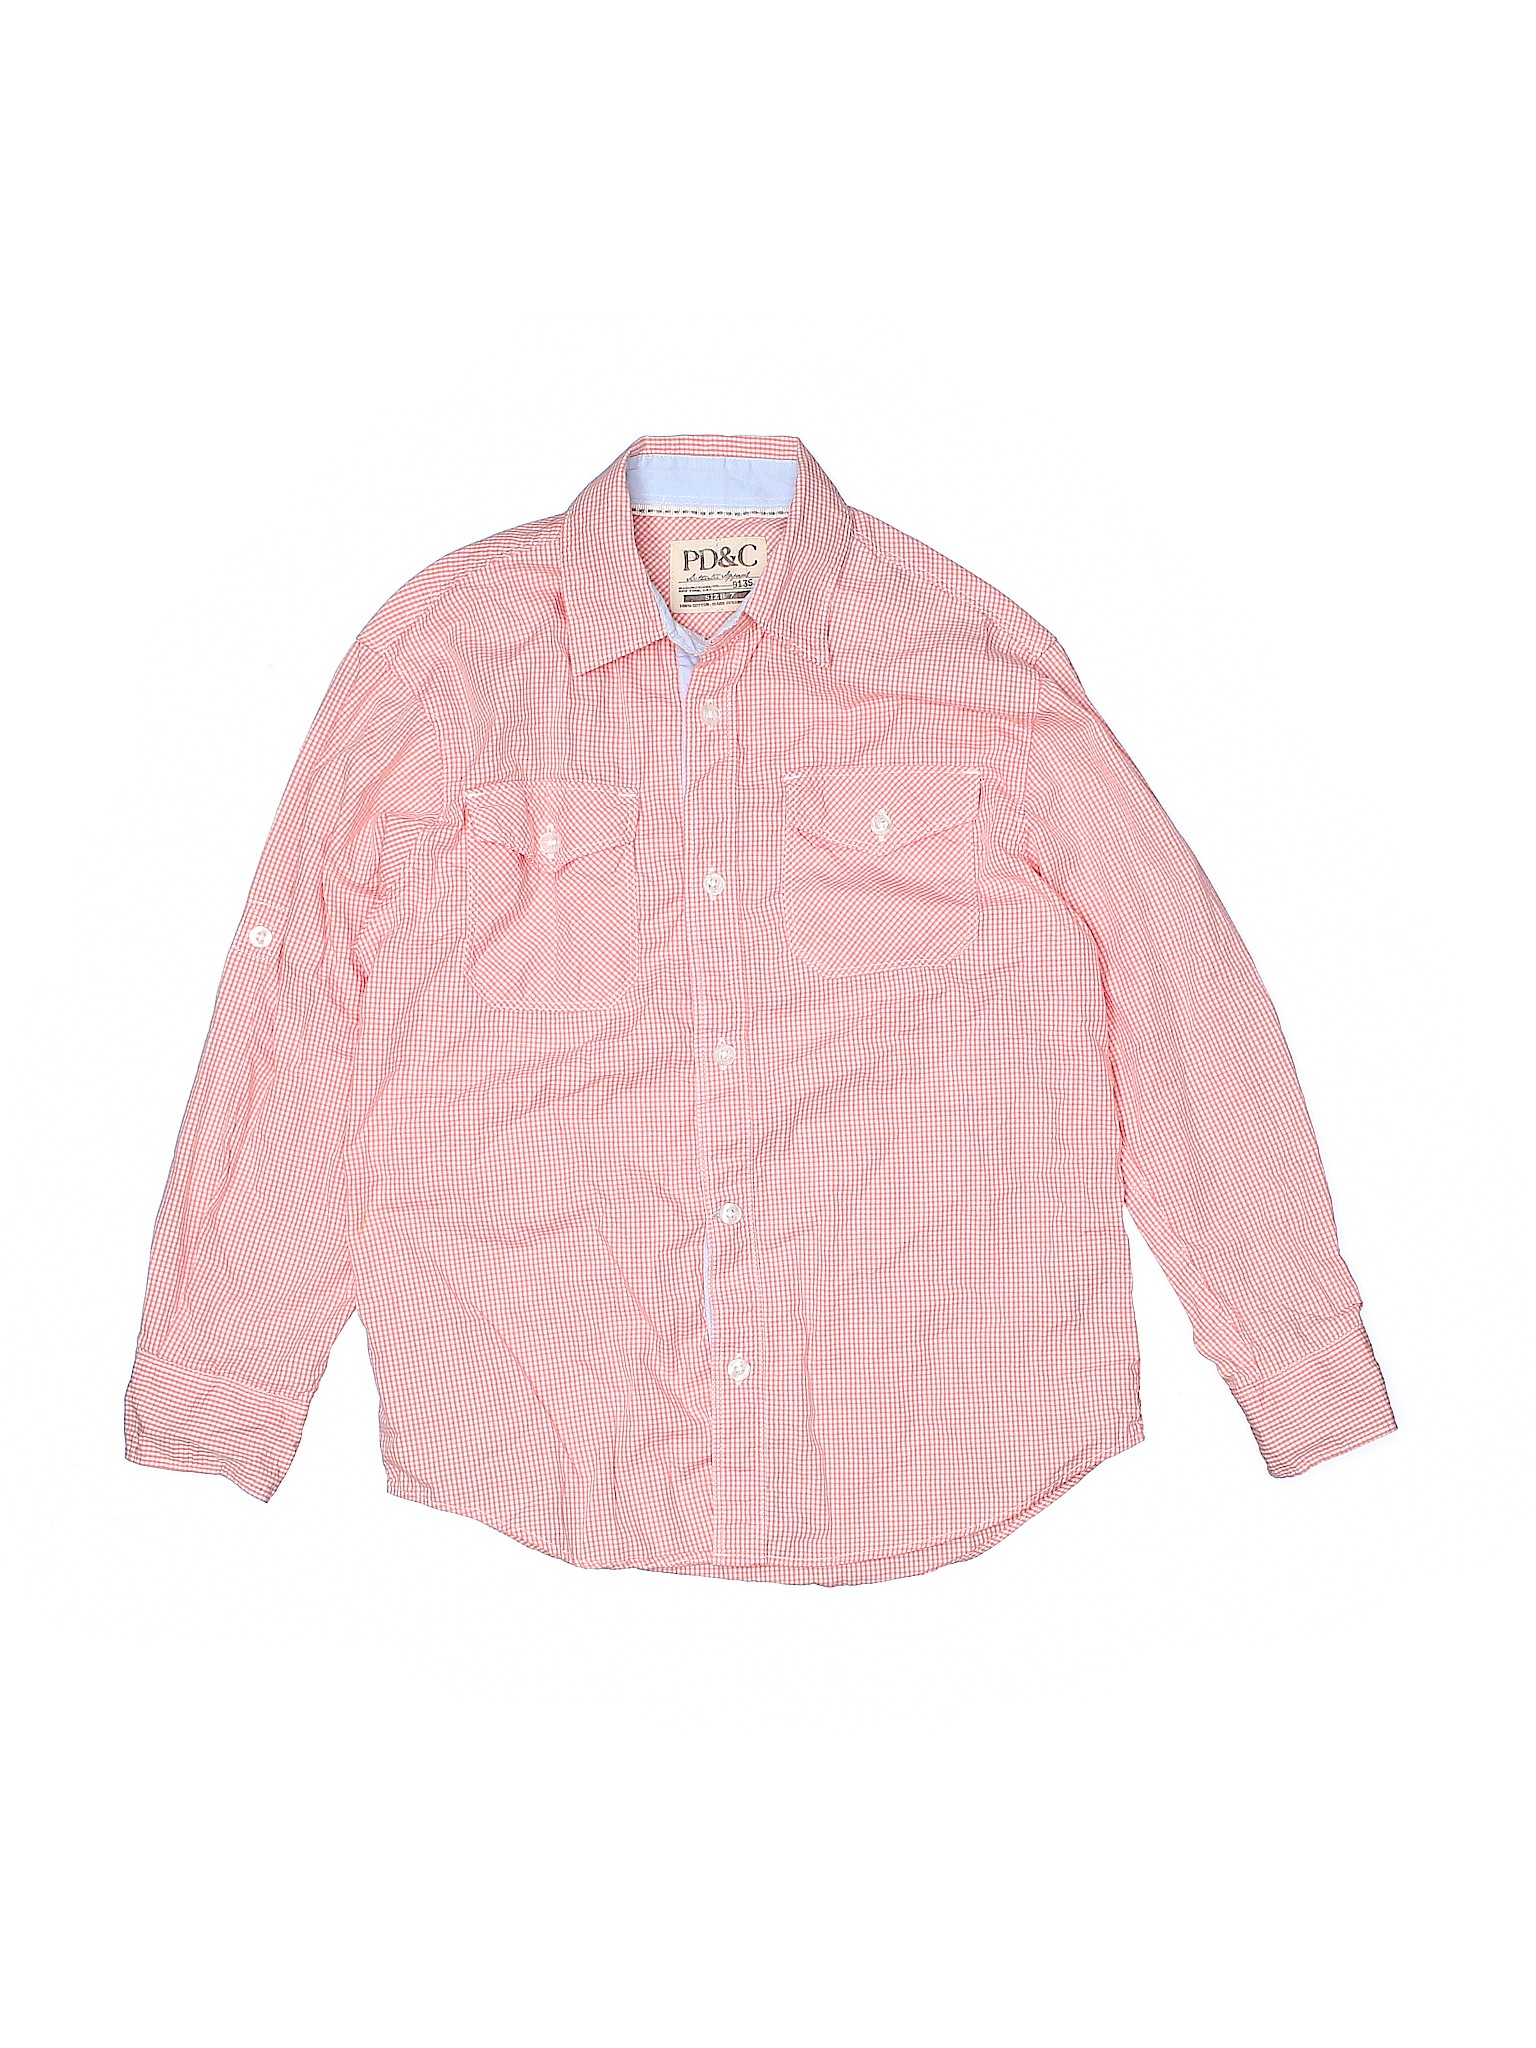 Pd&c Boys Pink Long Sleeve Button-Down Shirt 7 | eBay